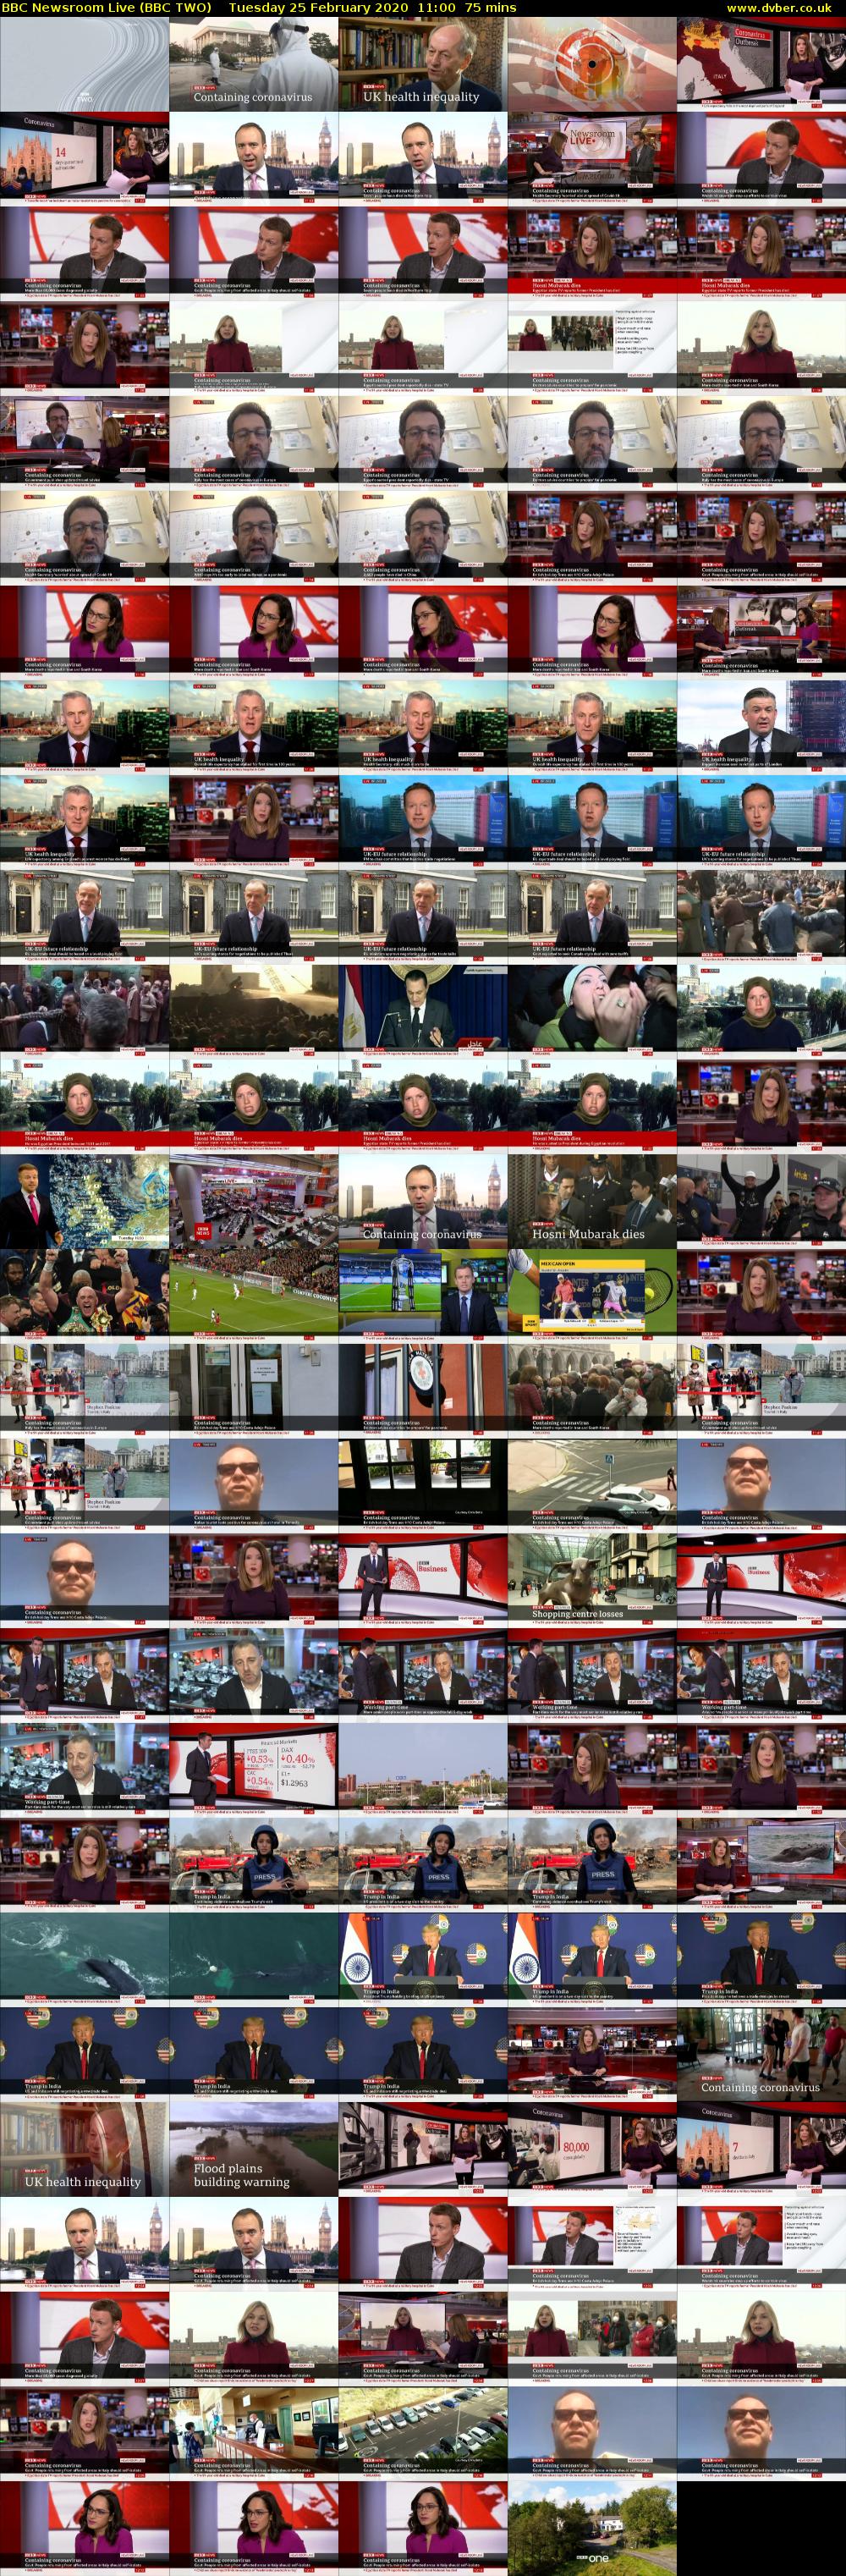 BBC Newsroom Live (BBC TWO) Tuesday 25 February 2020 11:00 - 12:15